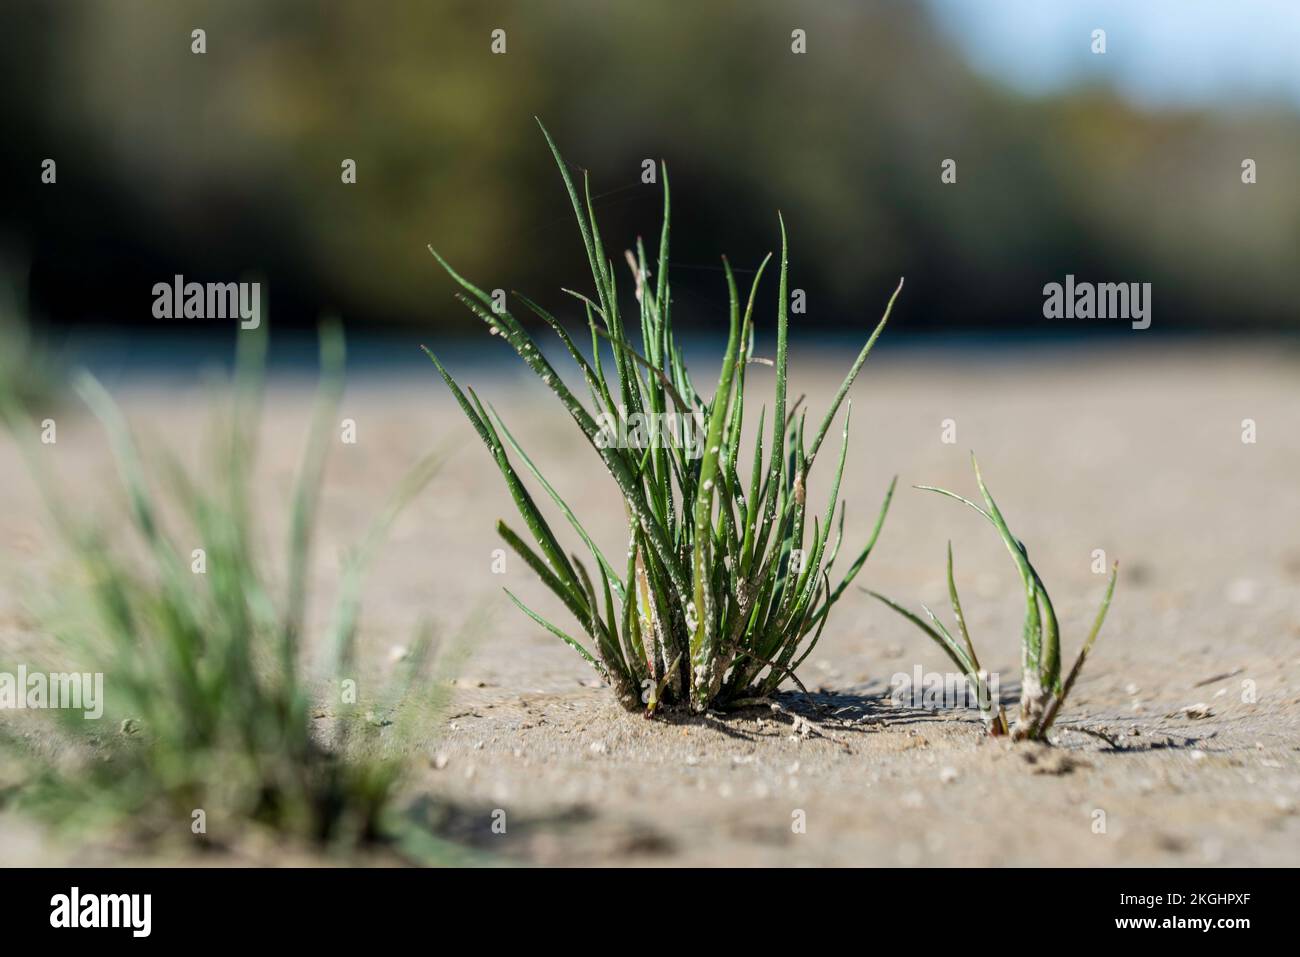 A closeup shot of Elytrigia grass growing on the dry soil Stock Photo